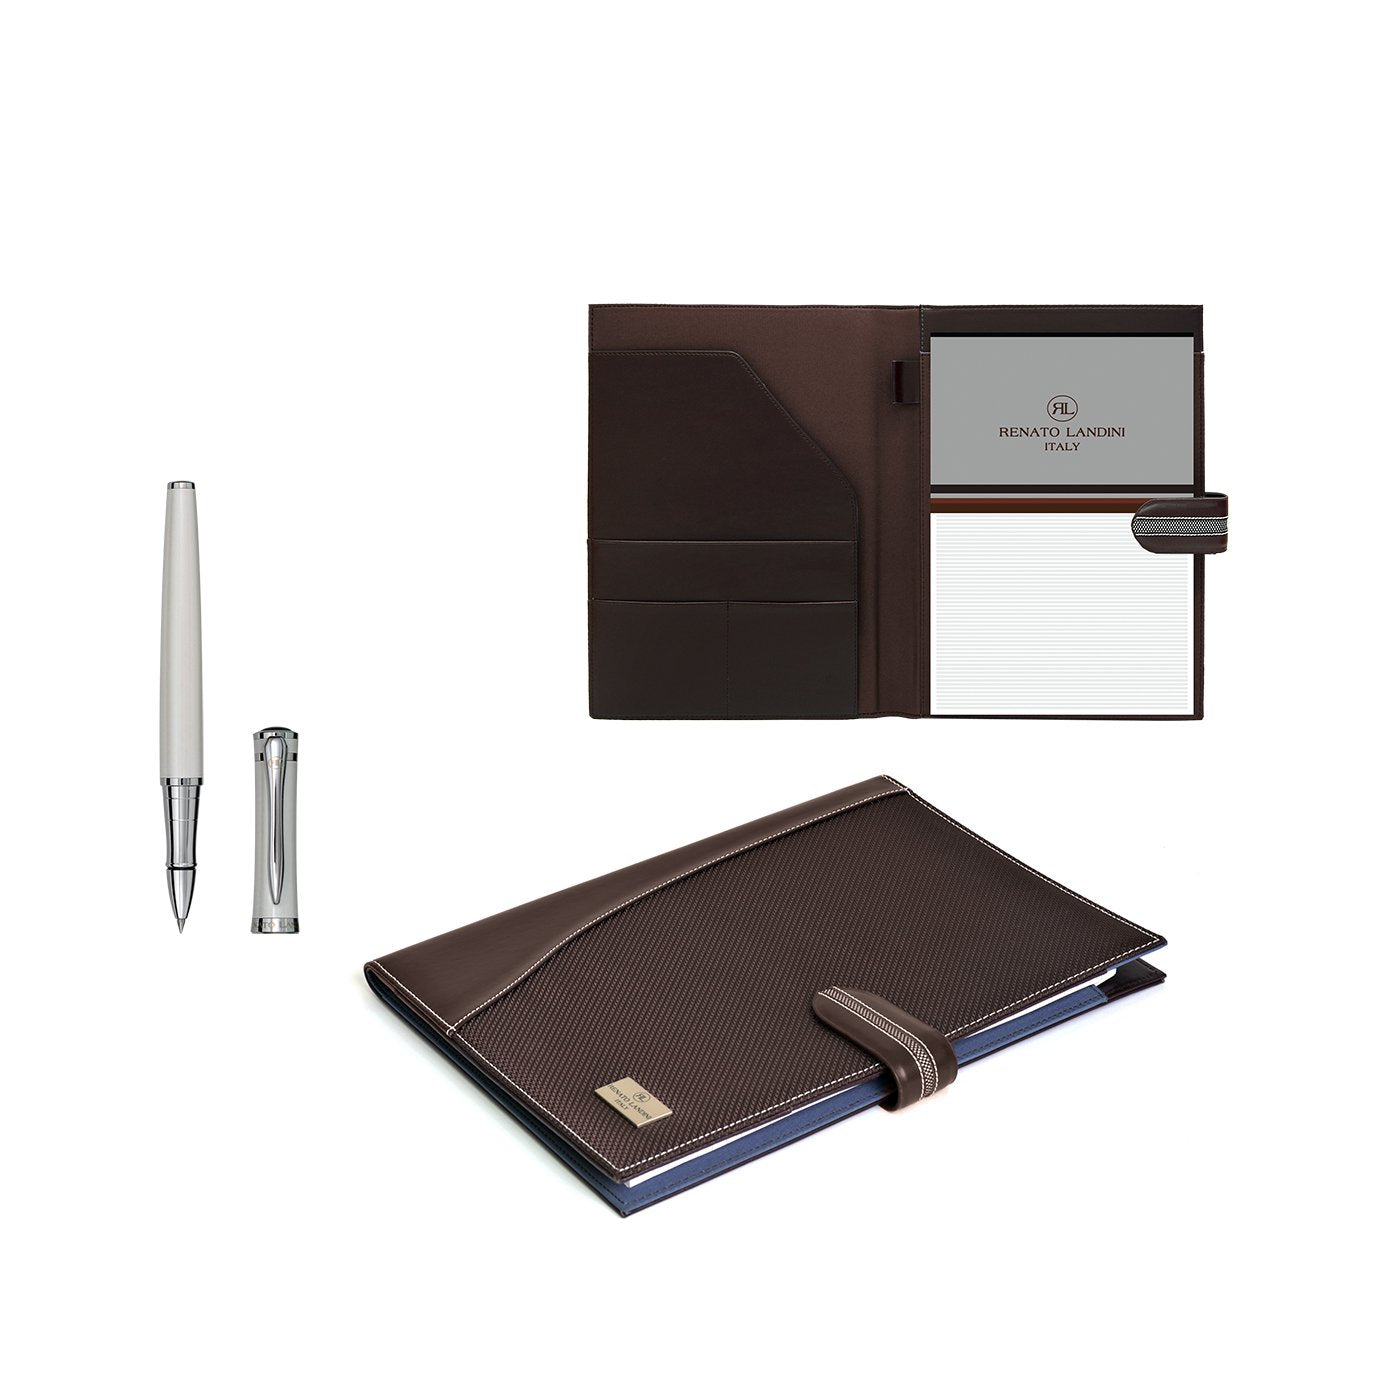 RENATO LANDINI Gift Set: Brown Leather & Fabric A5 Folder + Pen